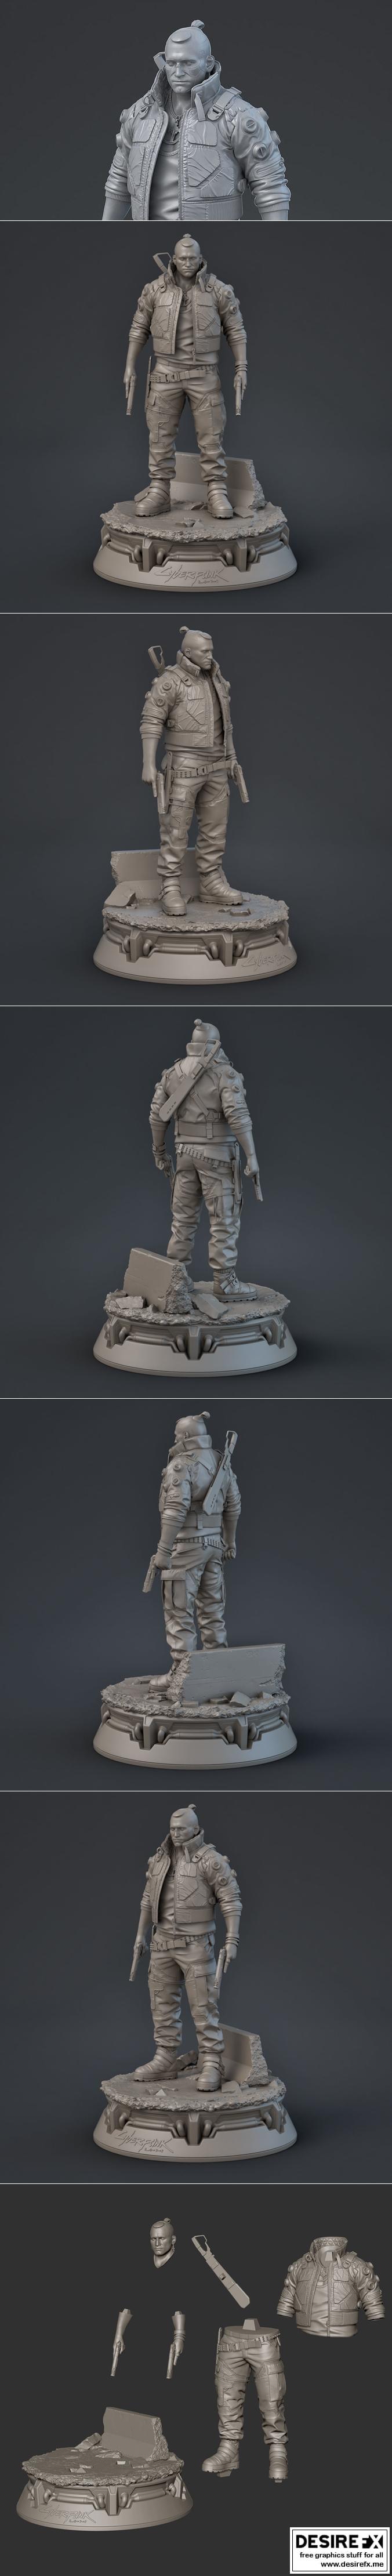 Desire FX 3d models | Jackie Welles – 3D Print Model